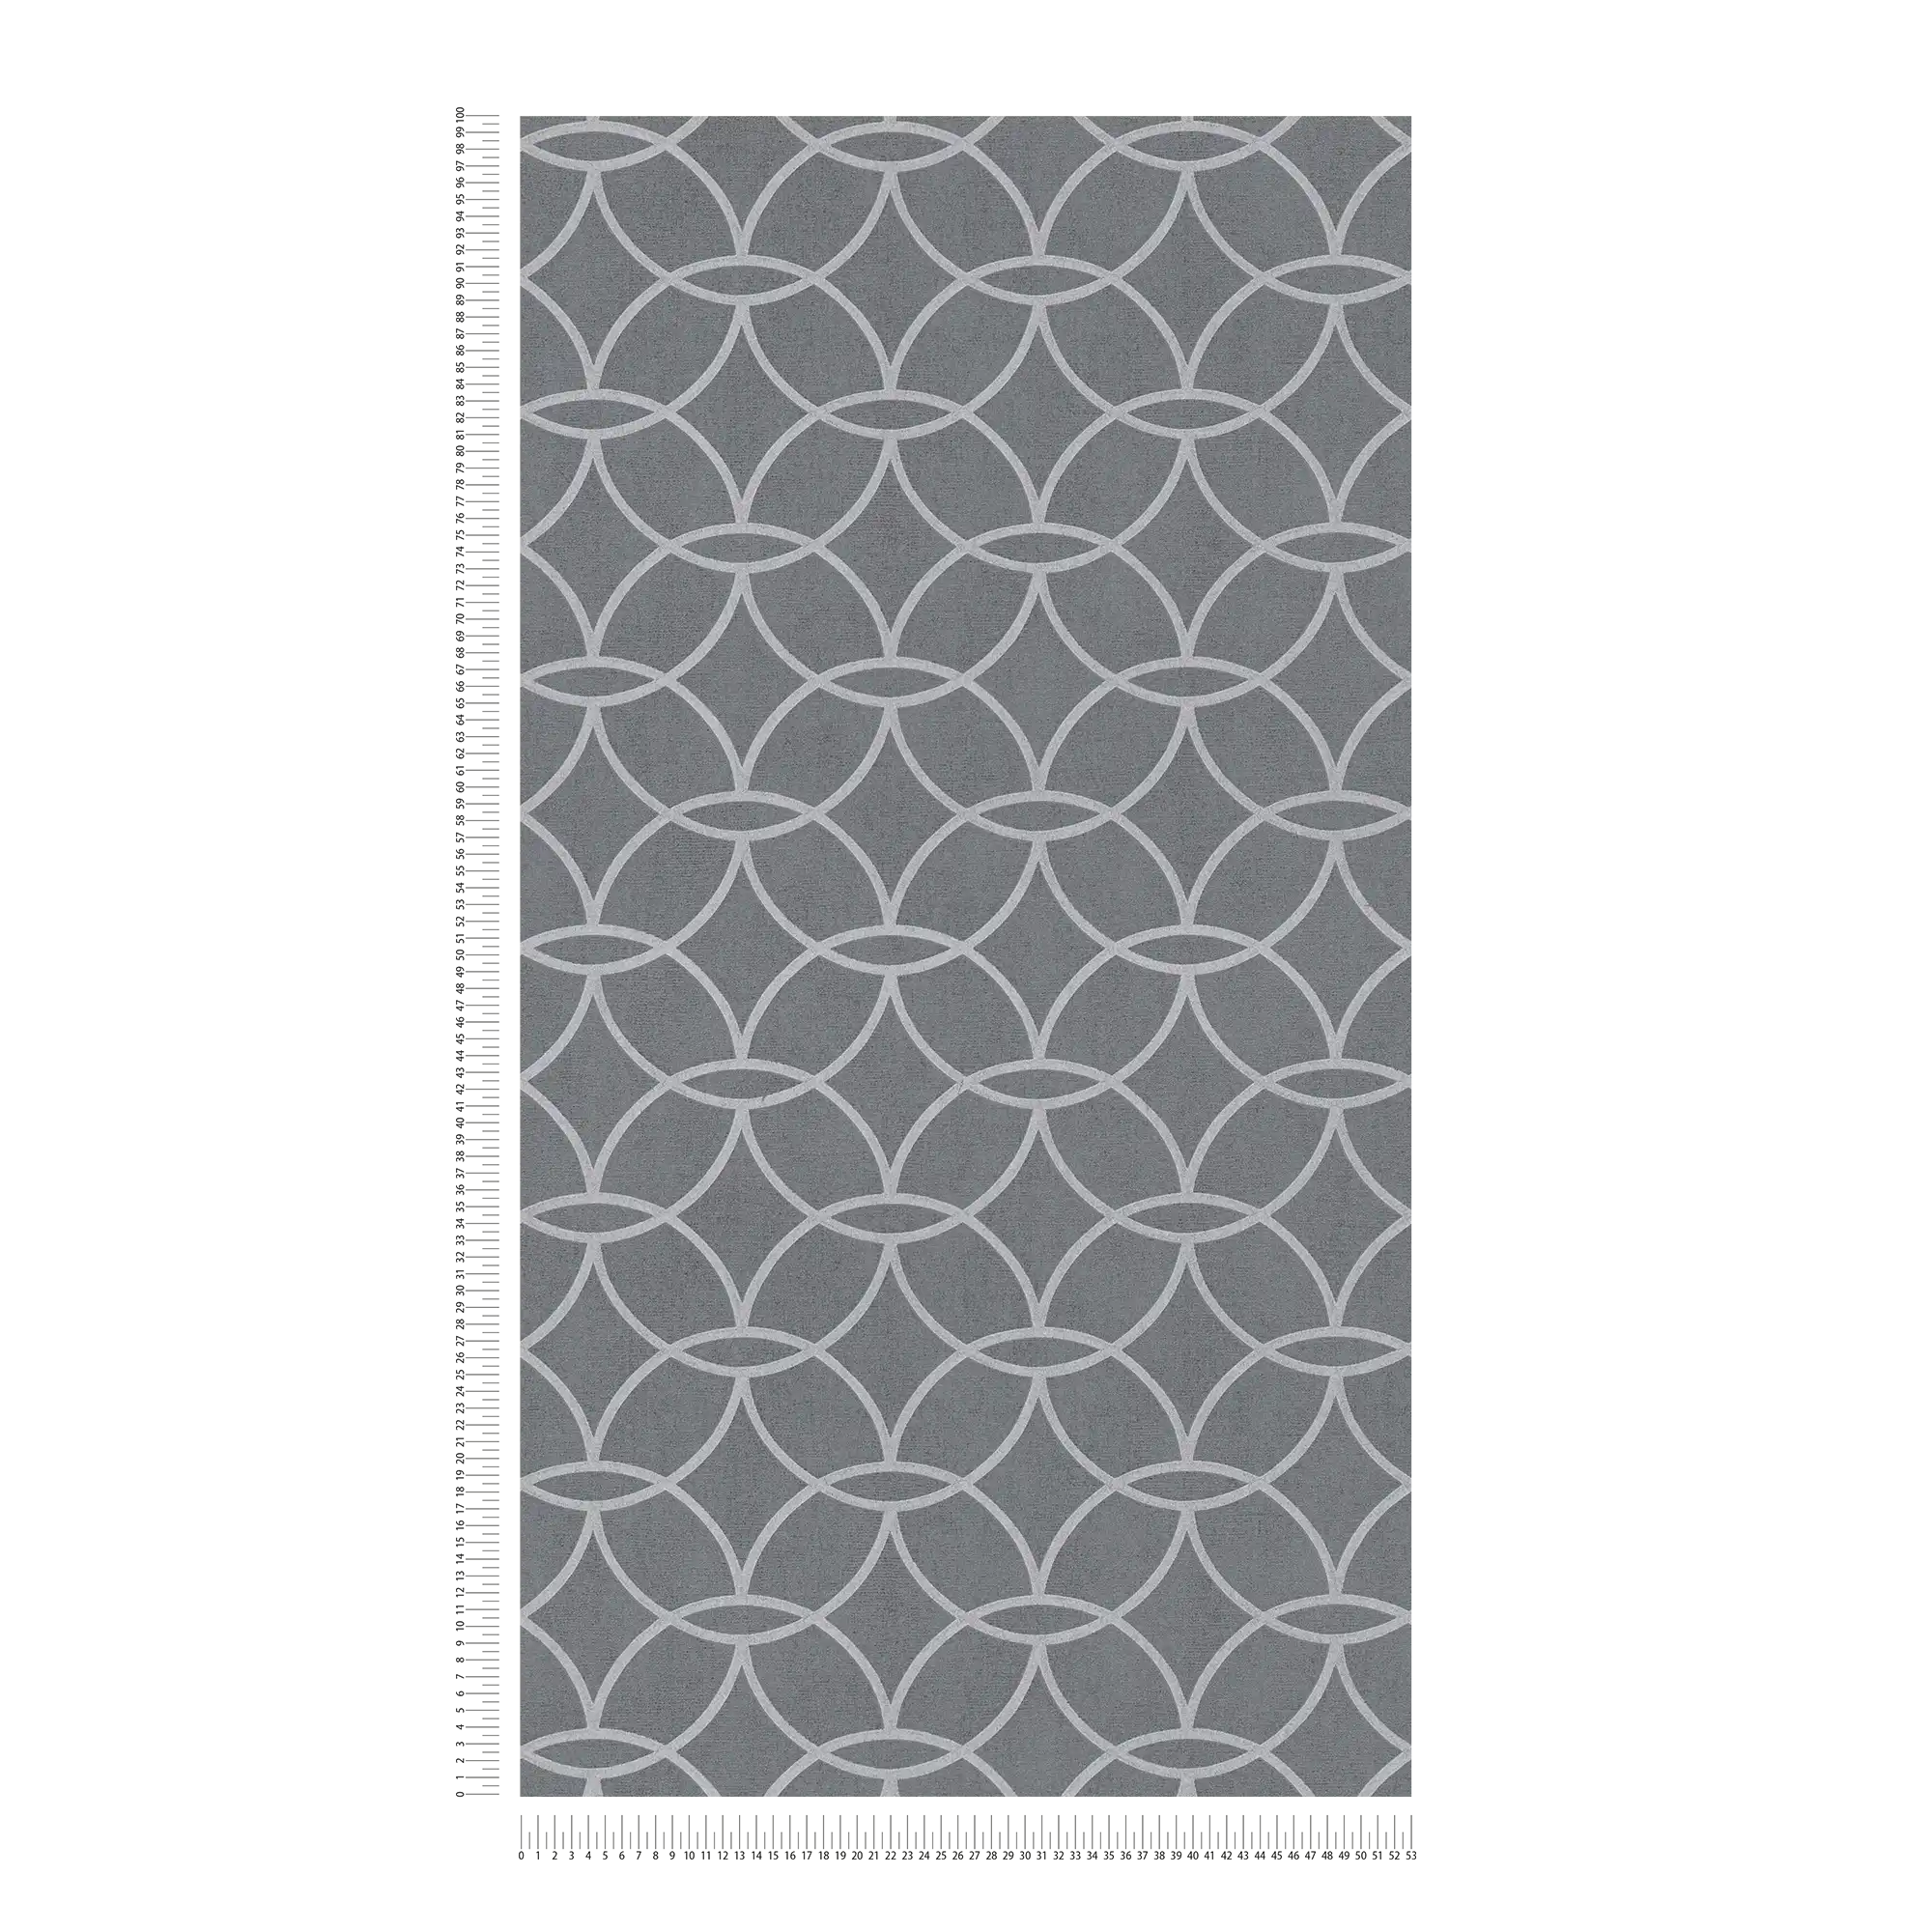             Graue Mustertapete mit silber Metallic-Muster & Schimmer-Effekt – Grau, Metallic
        